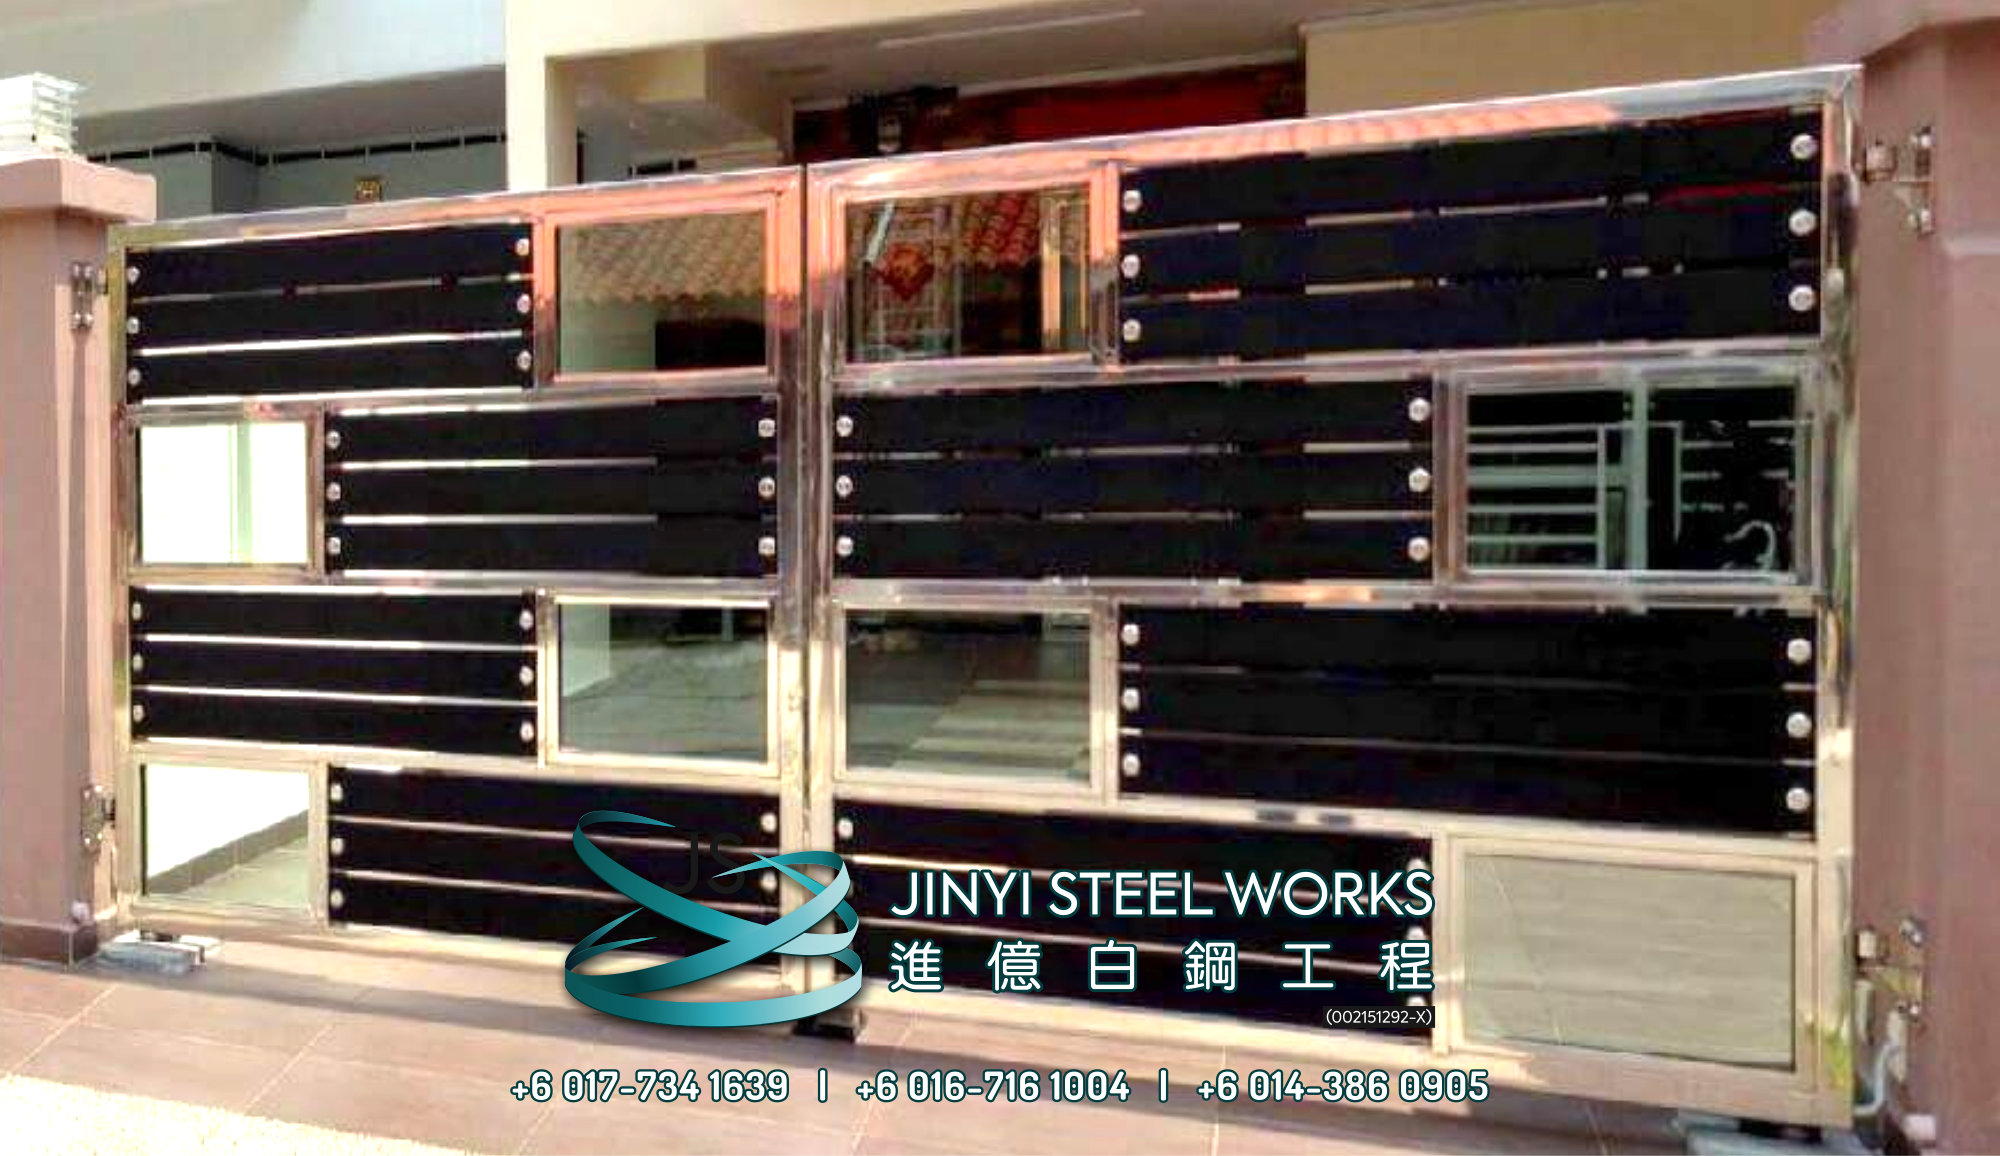 Jinyi Steel Works 铁与不锈钢产品制造商 为您定制钢铁产品与安装 柔佛 马六甲 森美兰 吉隆坡 雪兰莪 彭亨 峇株巴辖 不锈钢制造商 B22